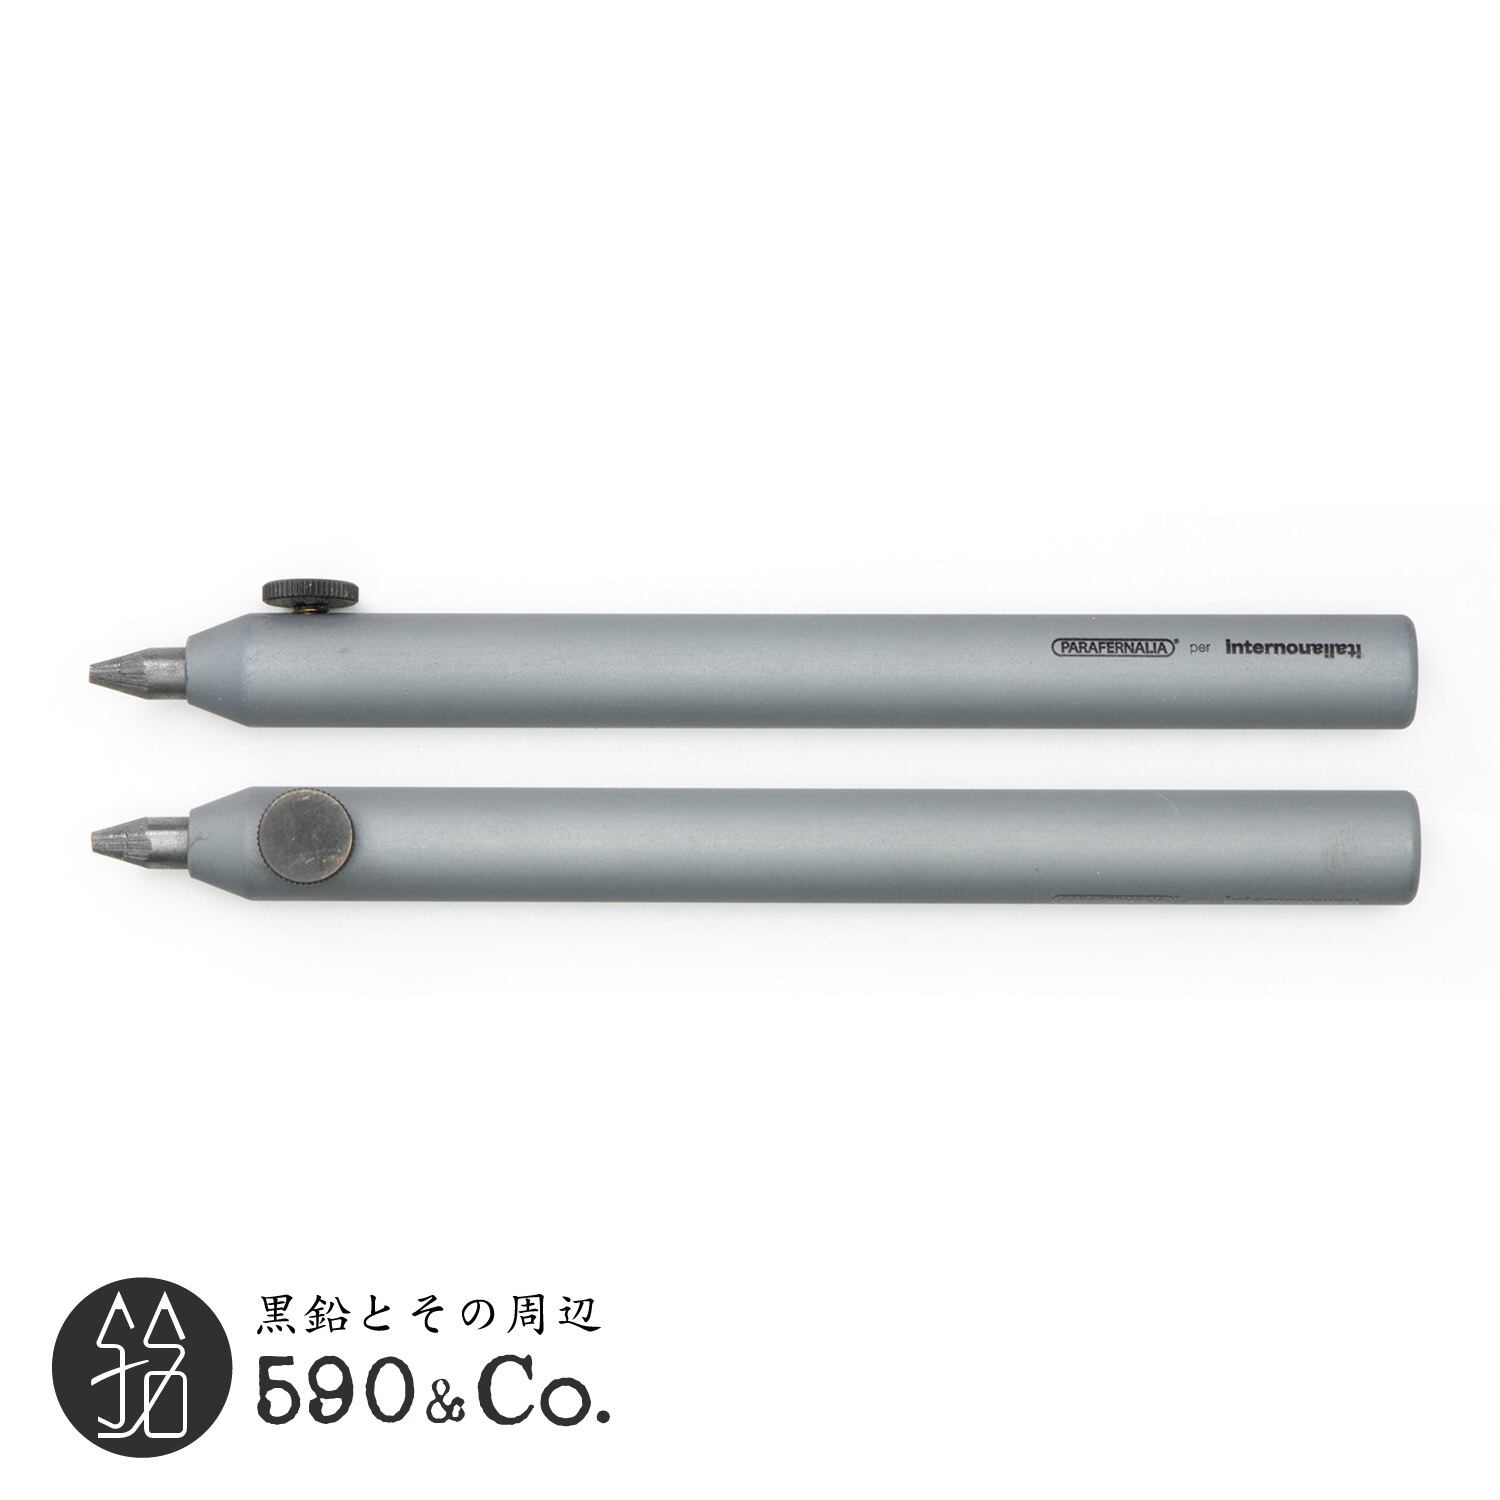 【PARAFERNALIA × Internoitaliano】 Neri Mechanical Pencil 5.5ミリ芯ホルダー (チタン)  590Co.